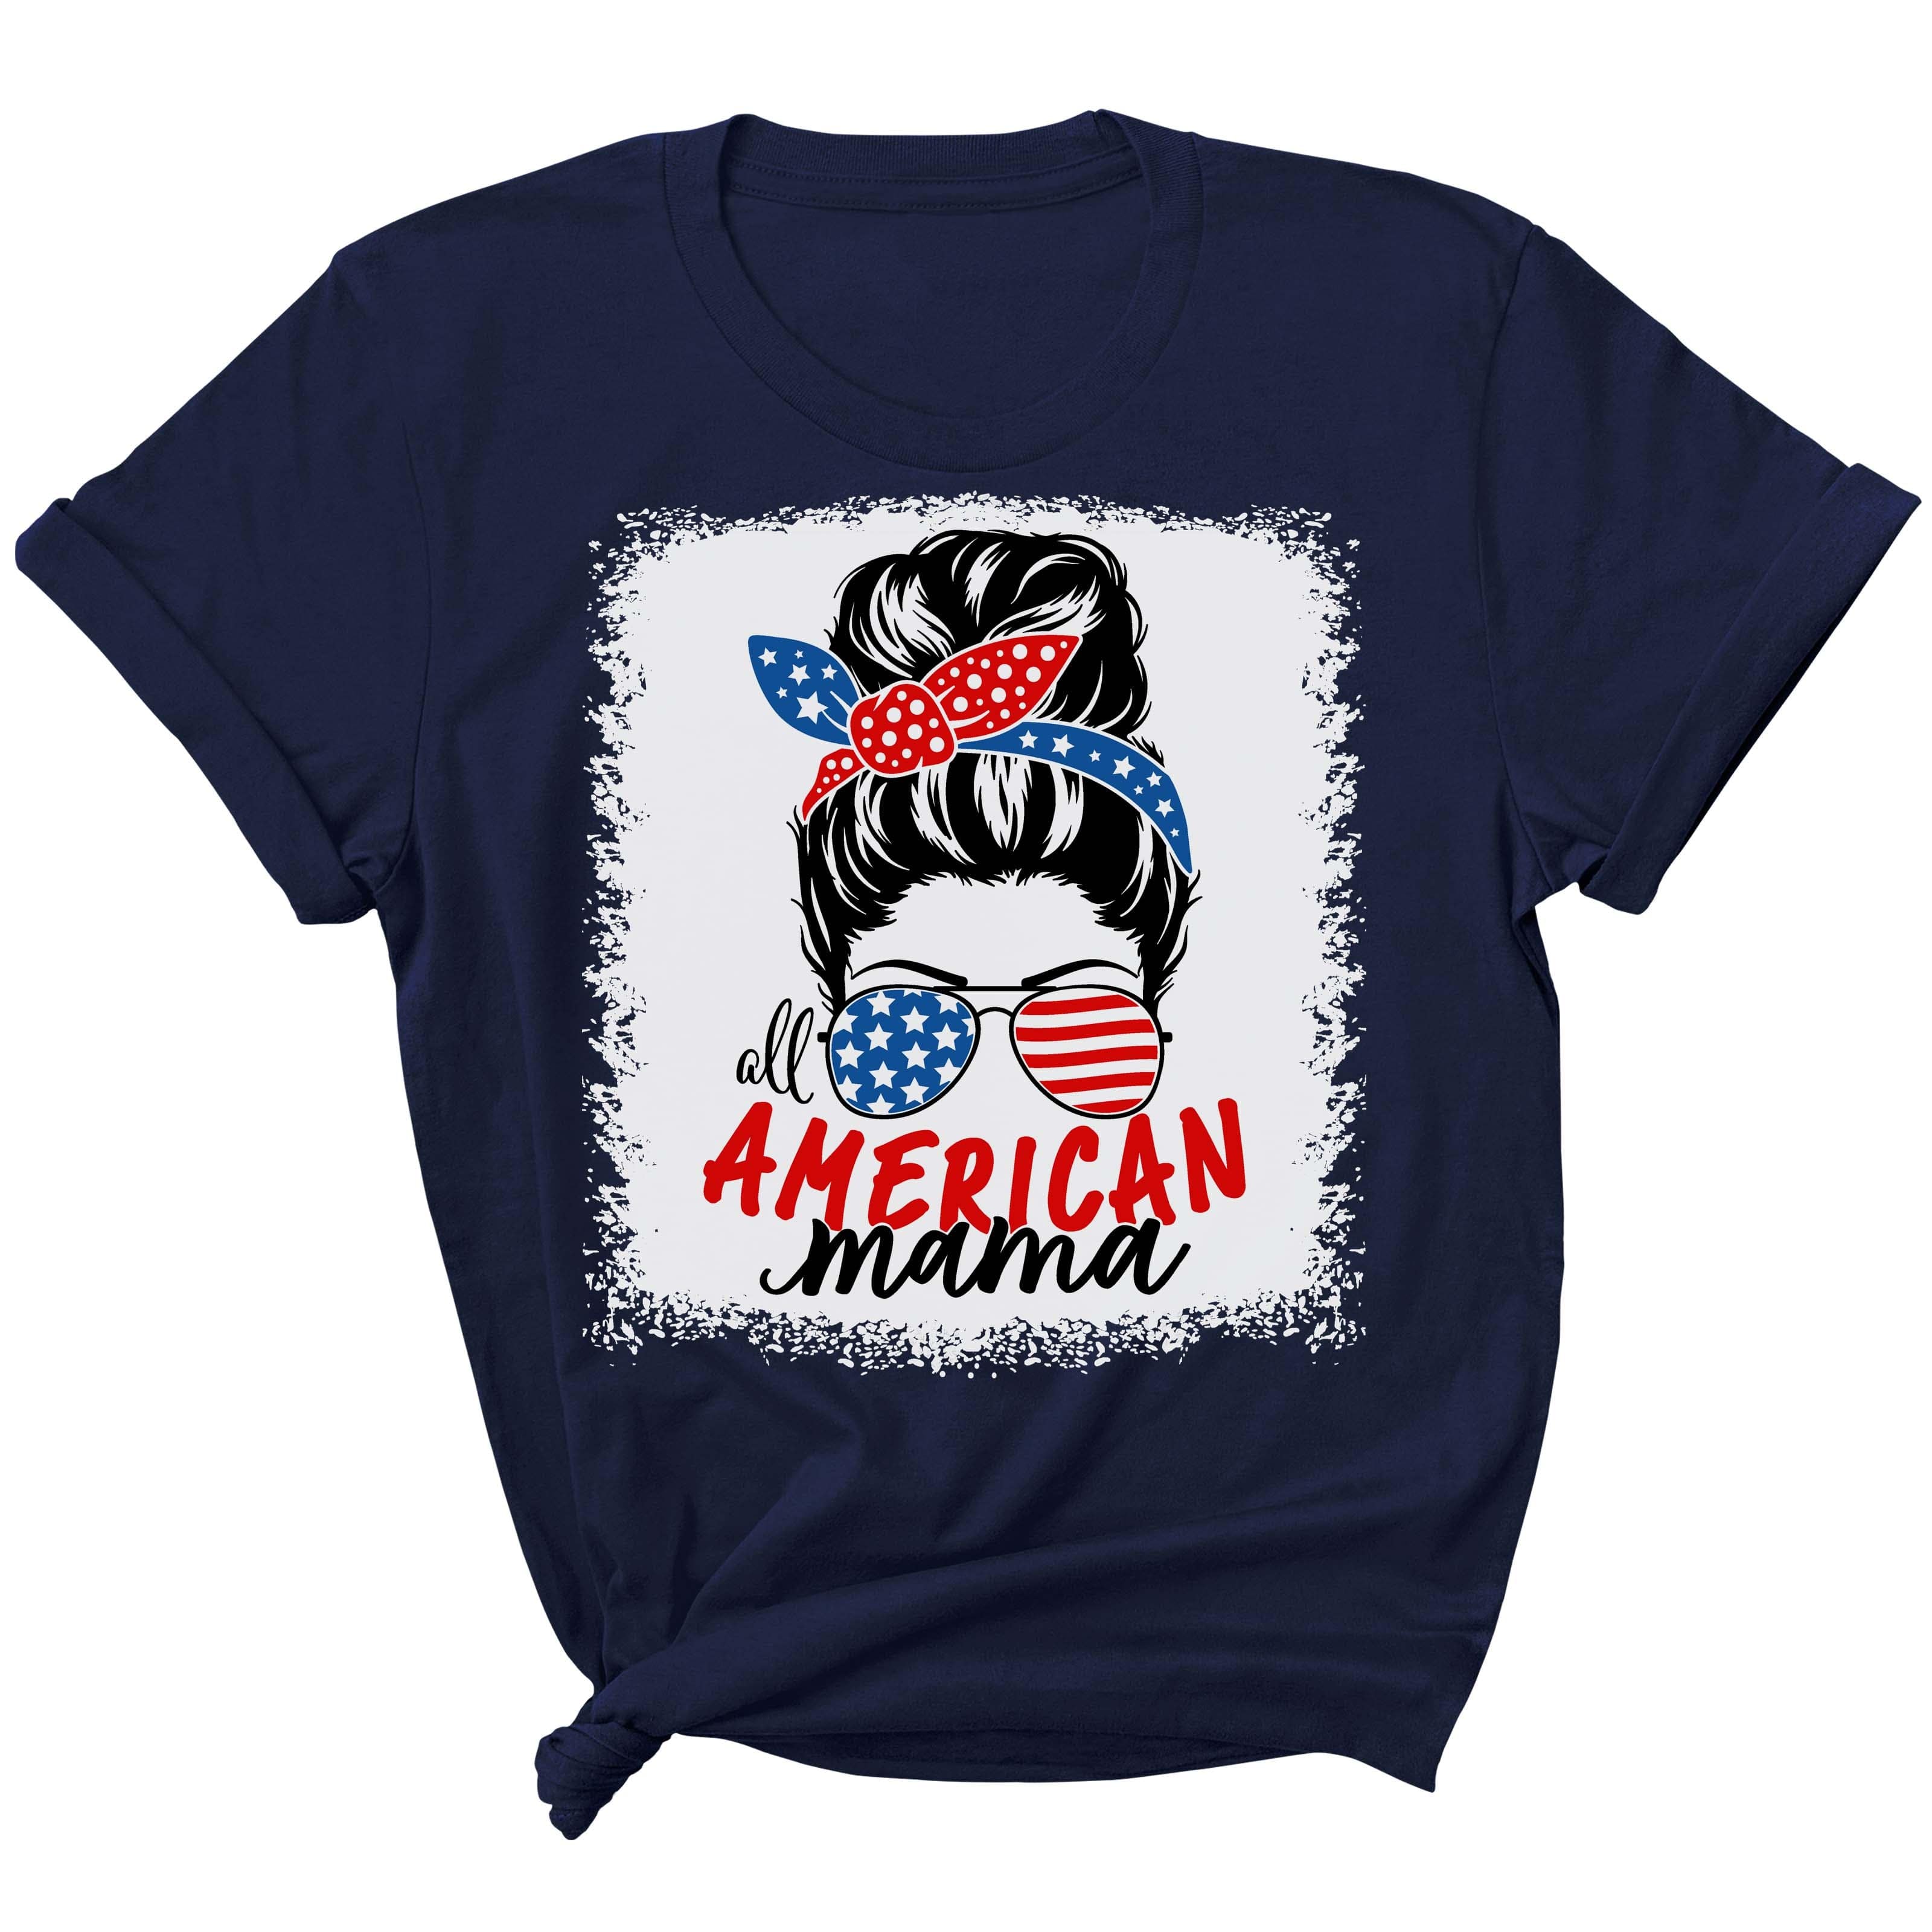 All American Mama Women's Print T-Shirt